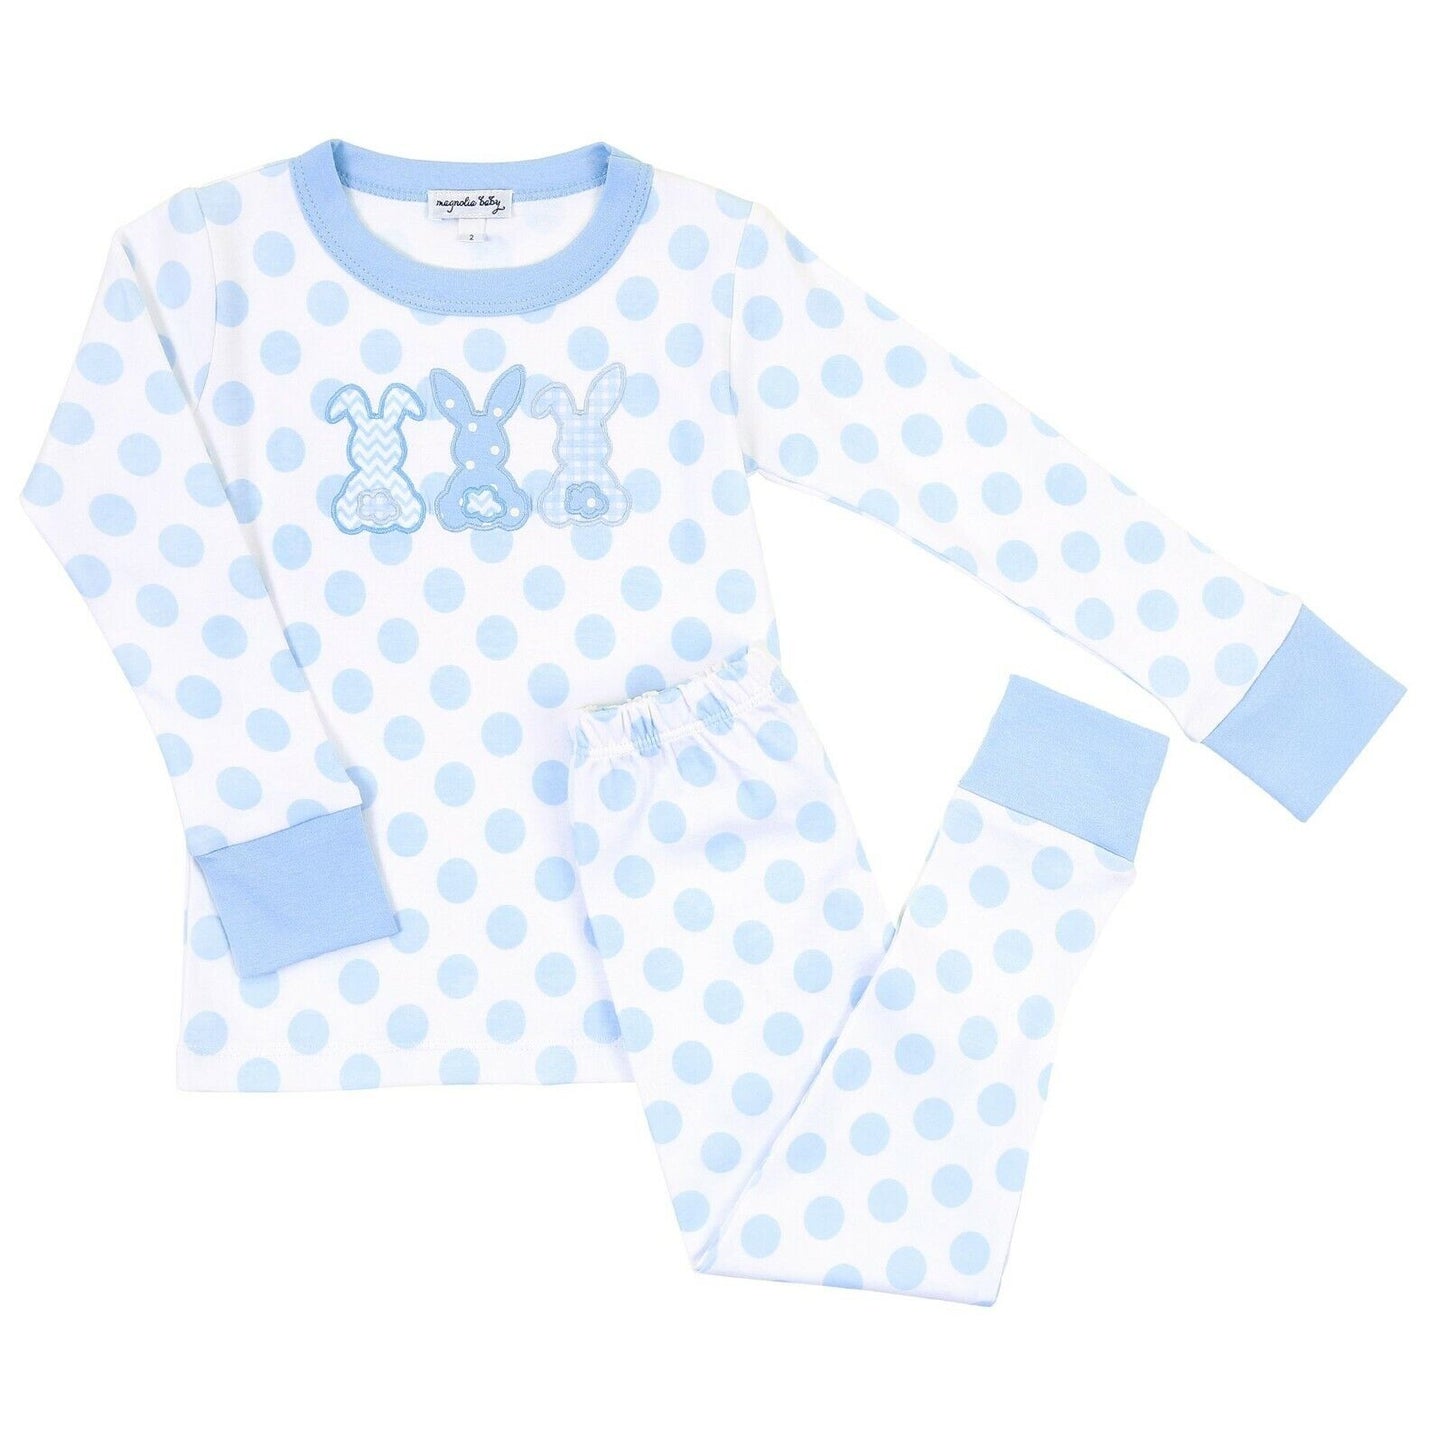 Magnolia Baby Boys BUNNY TRIO Long Pajamas Blue Pima Cotton Size 6/12 Months NEW